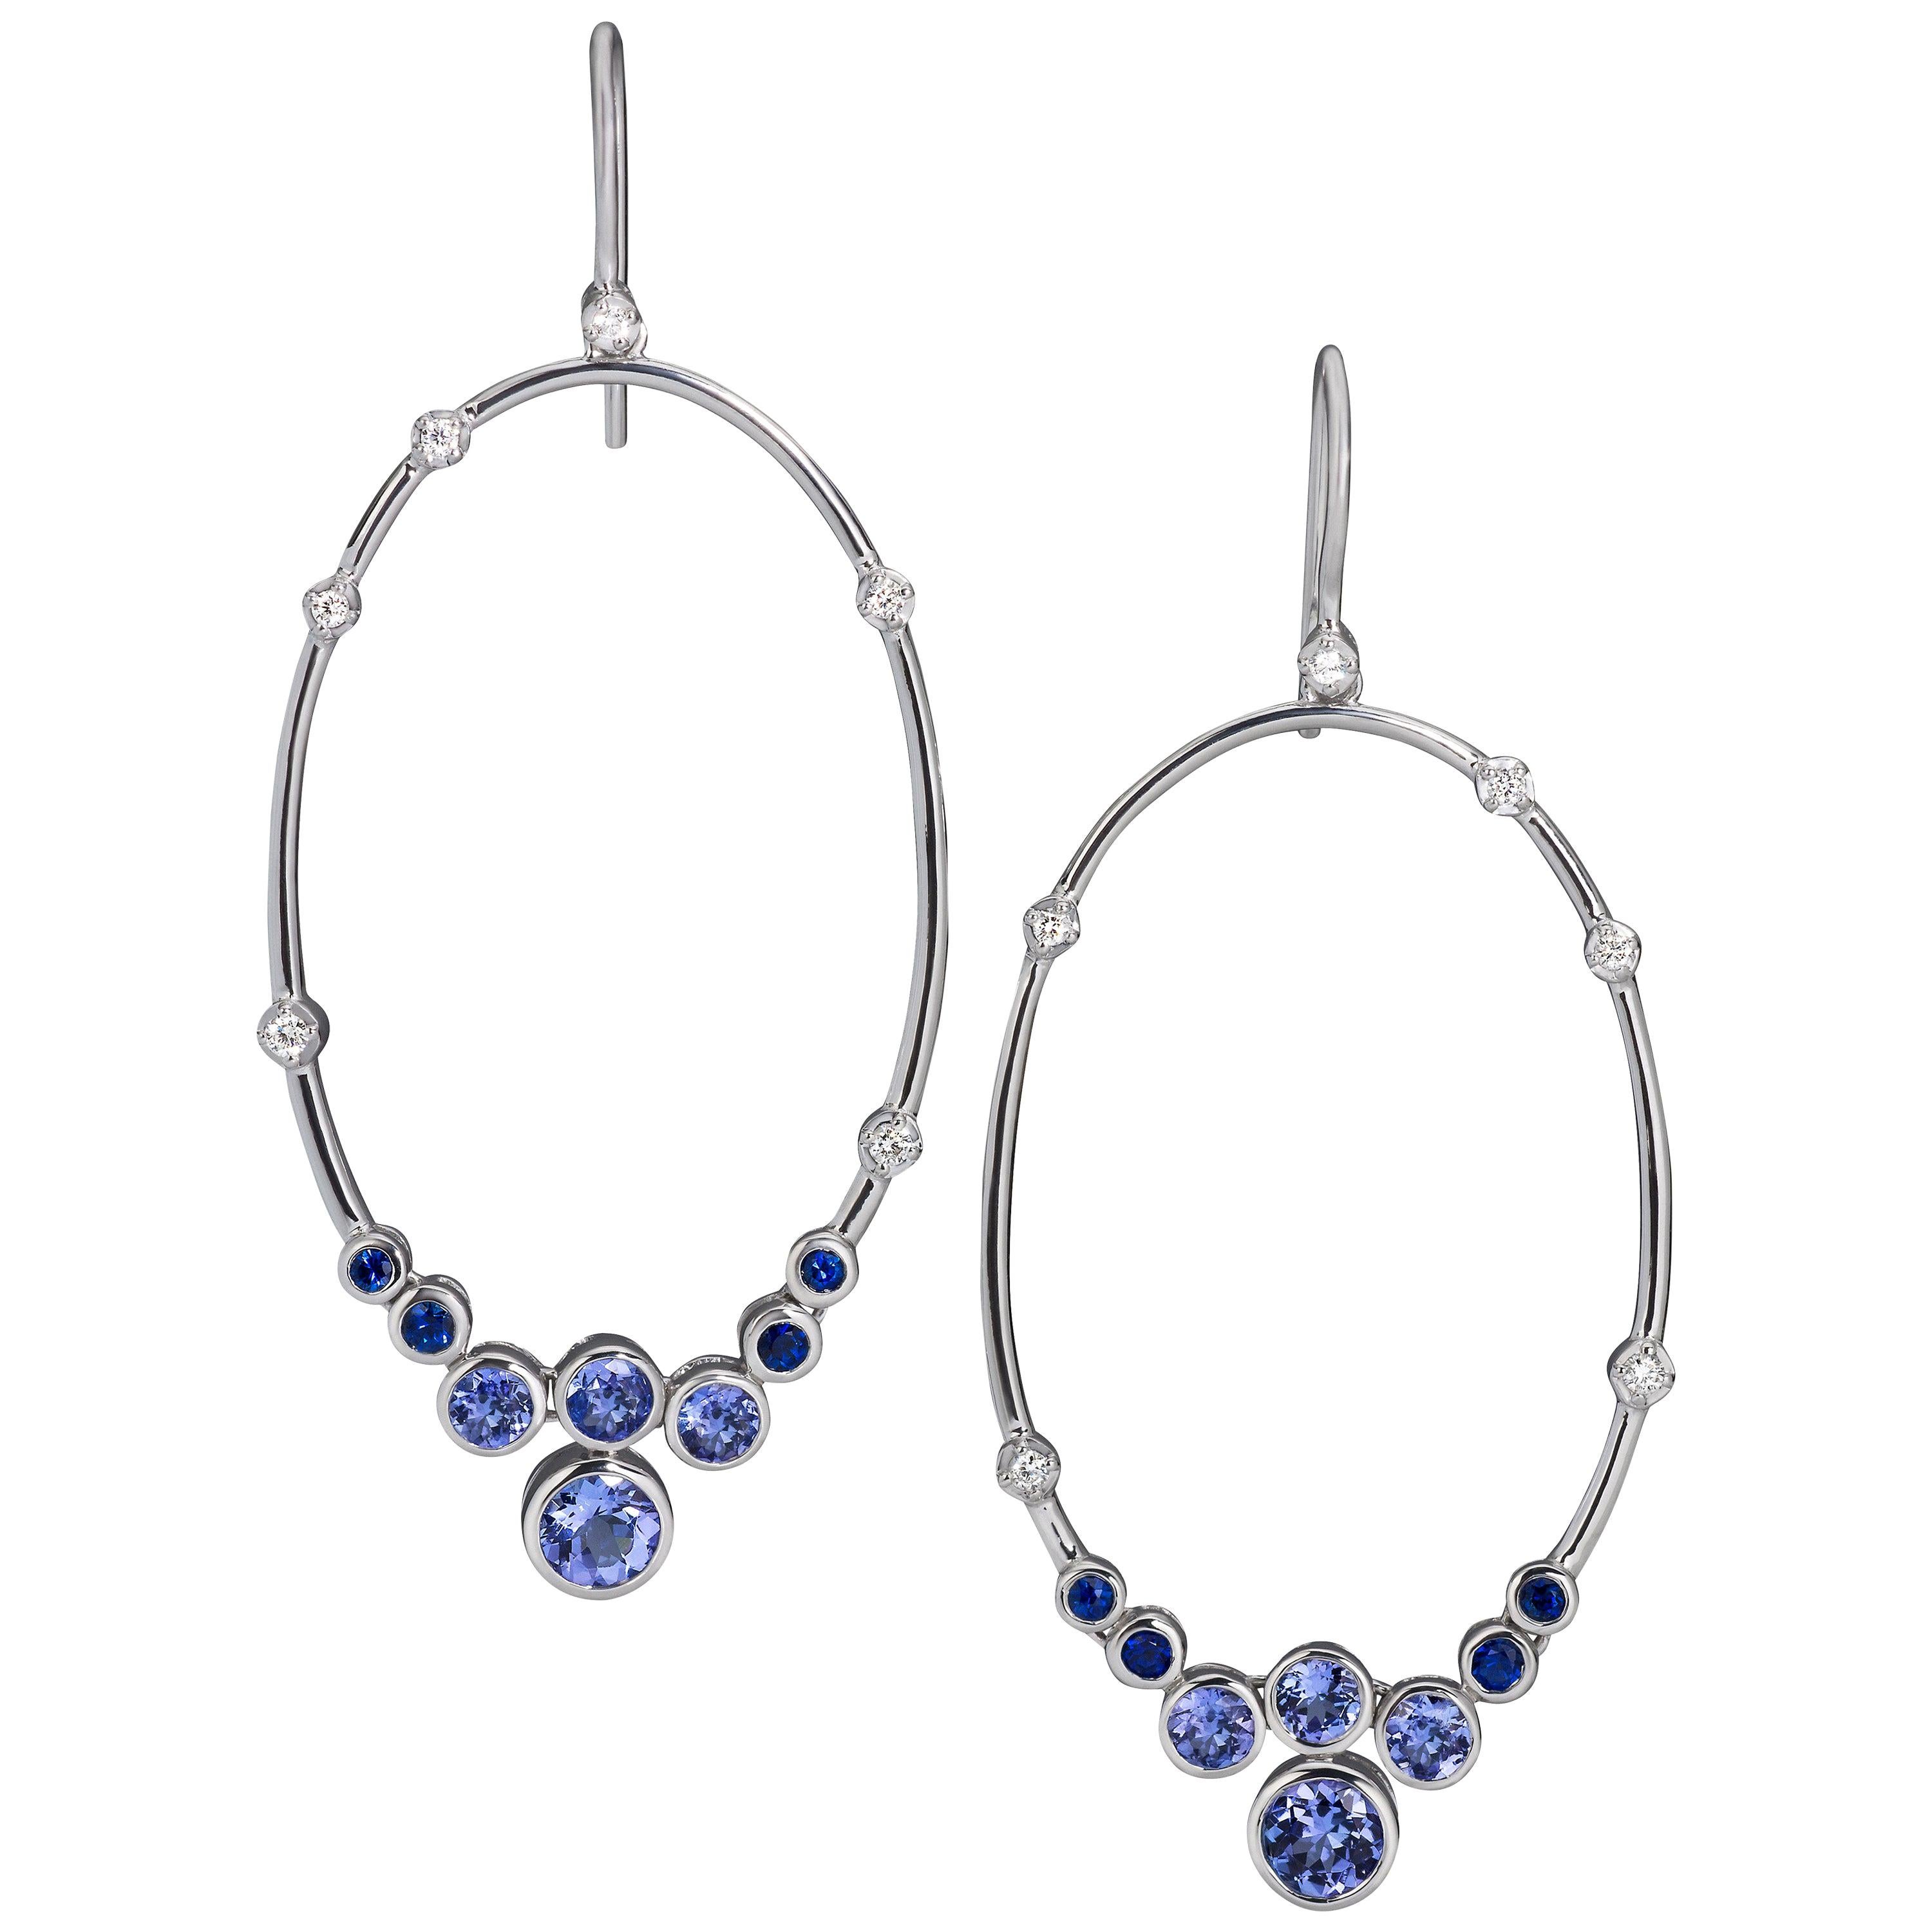 Tanzanite, Sapphire, Diamond and Sterling Silver Constellation Hoop Earrings